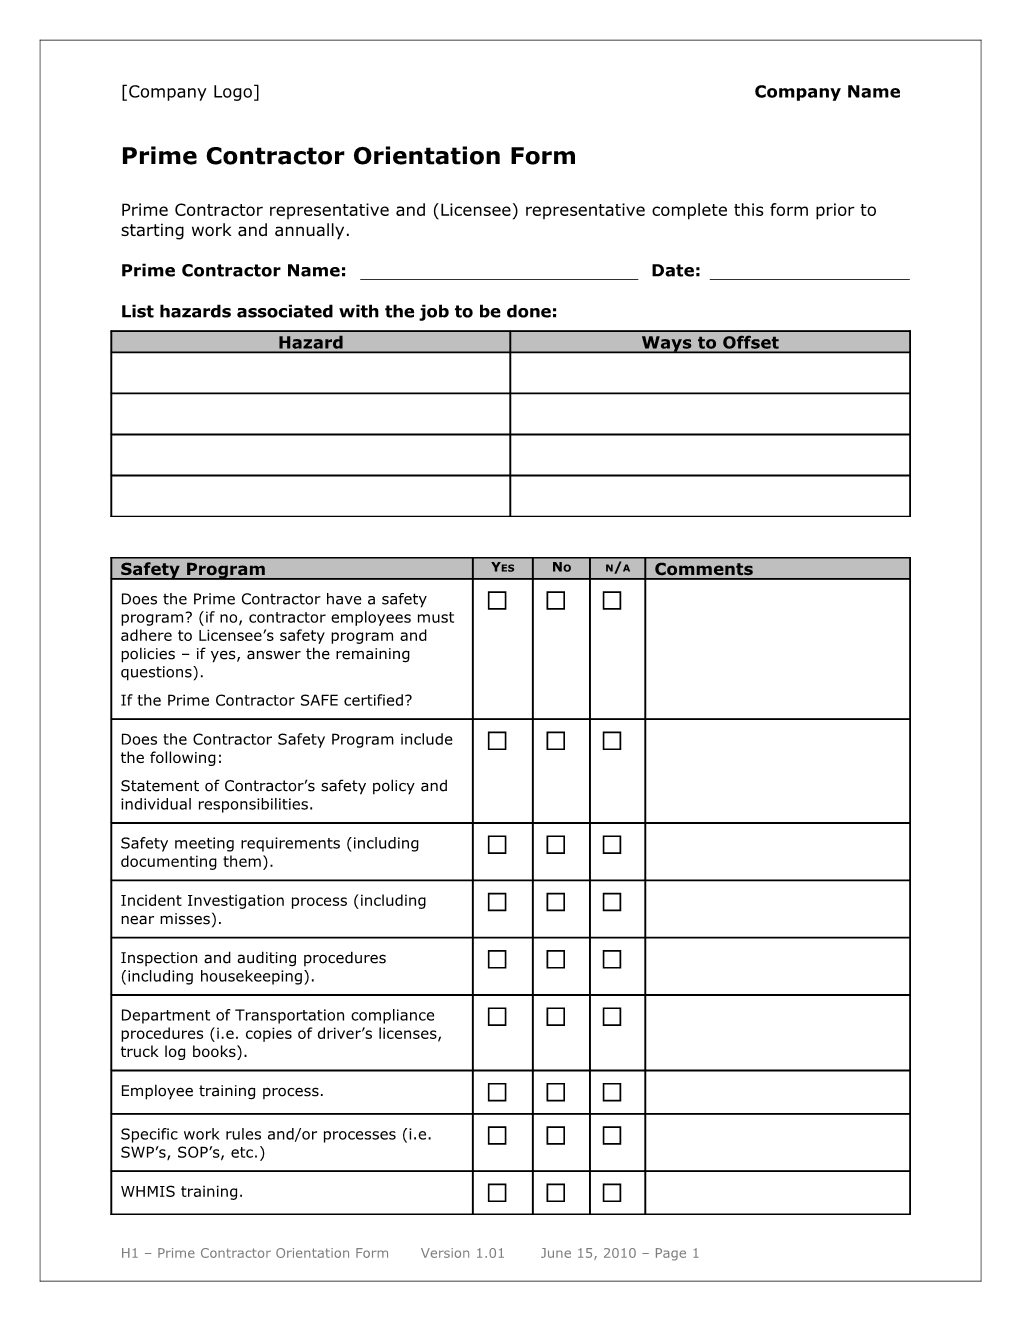 Prime Contractor Orientation Form